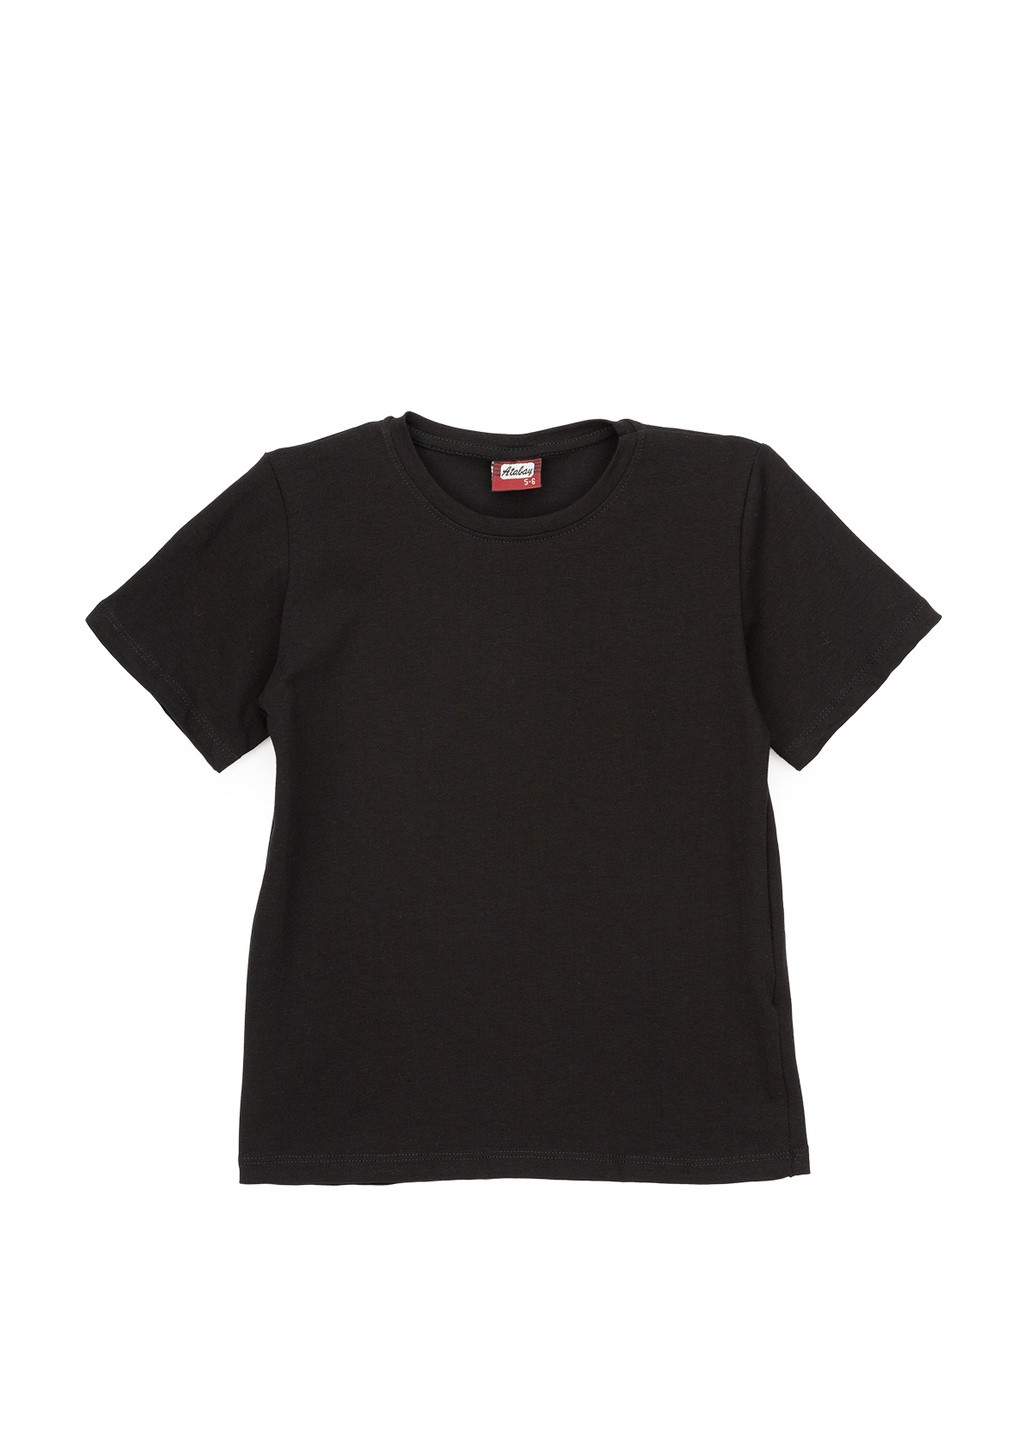 Черная летняя футболка Atabey